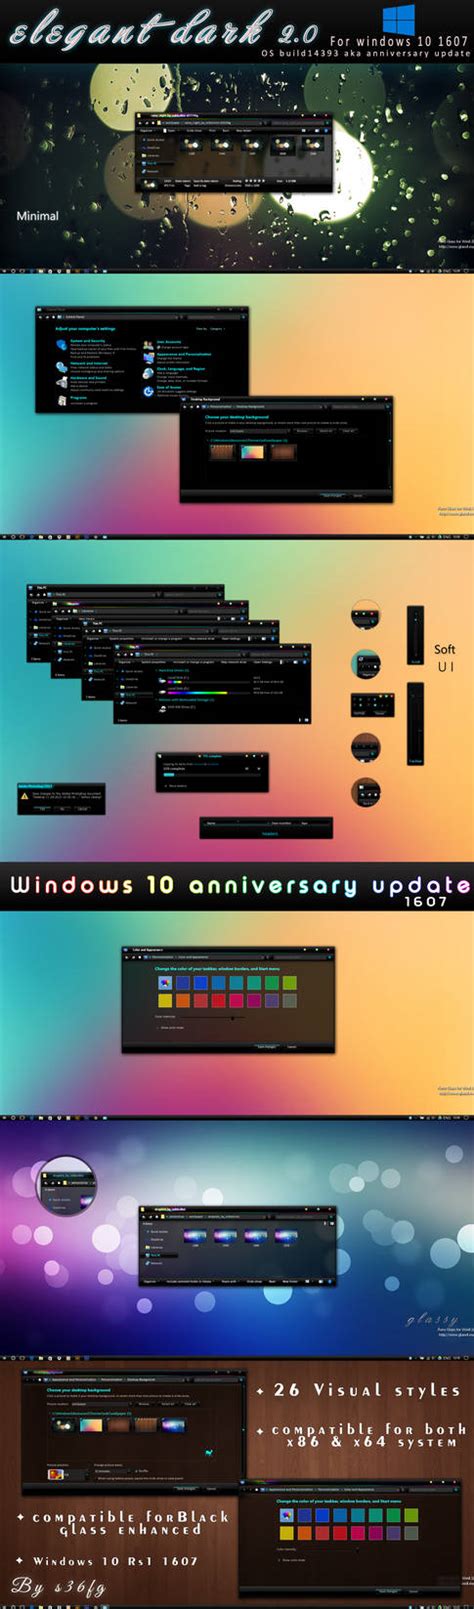 Elegant Dark 20 Theme For Windows 10 1607 By Swapnil36fg On Deviantart